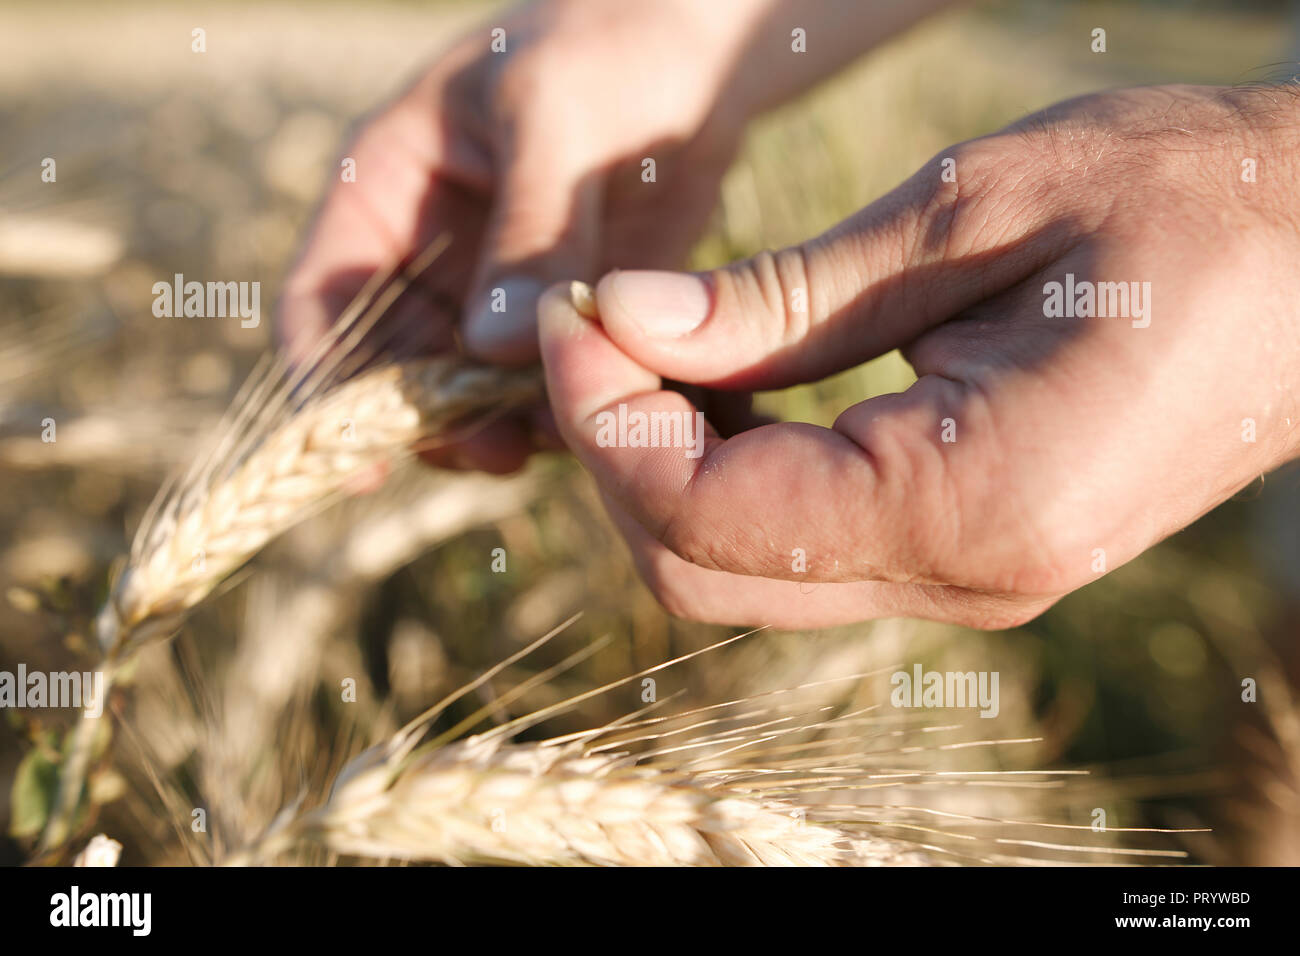 Man's hand holding wheat ear and grain Stock Photo